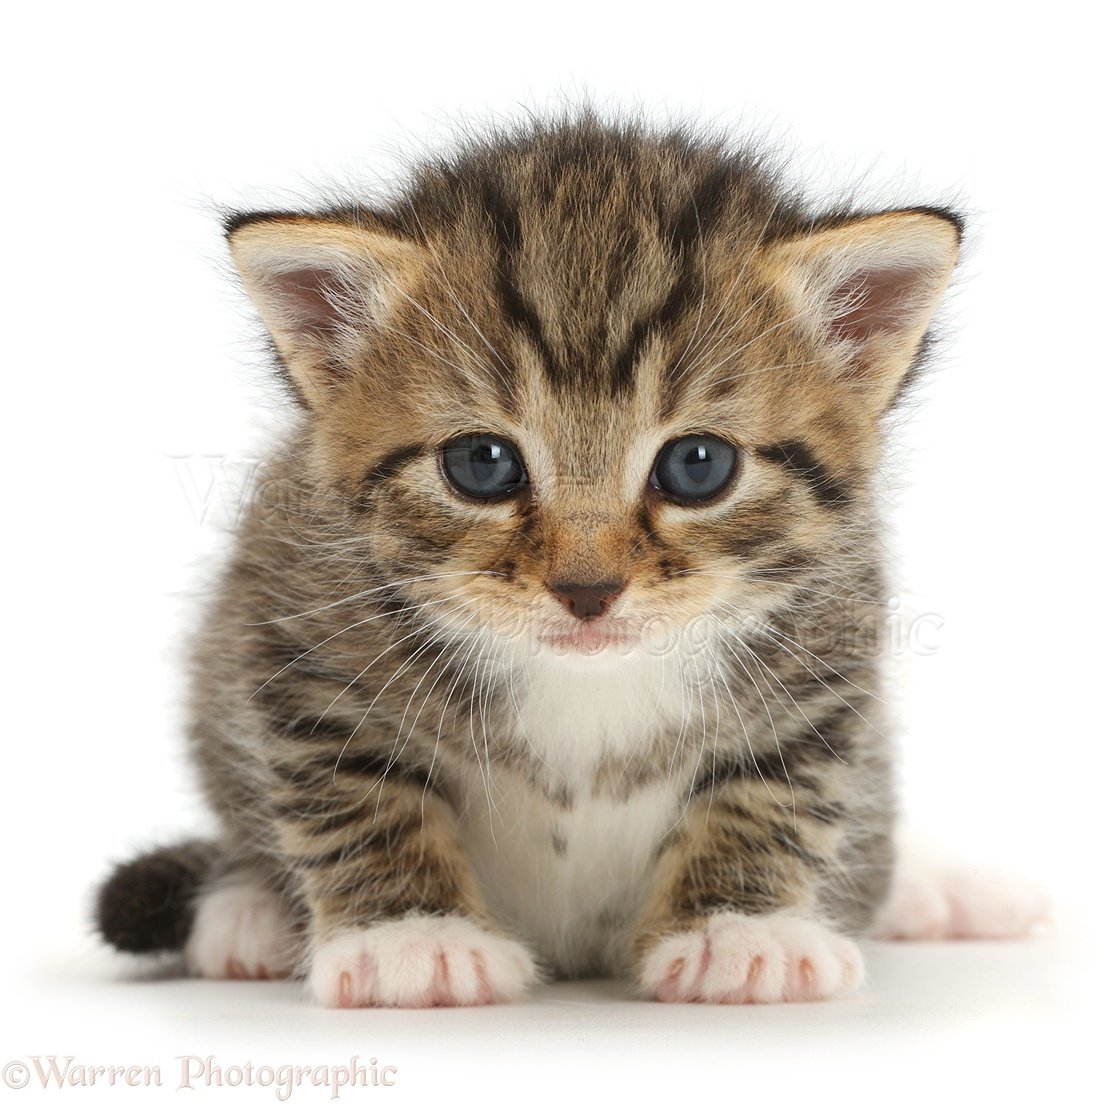 Cute tabby kitten, 3 weeks old photo WP42995